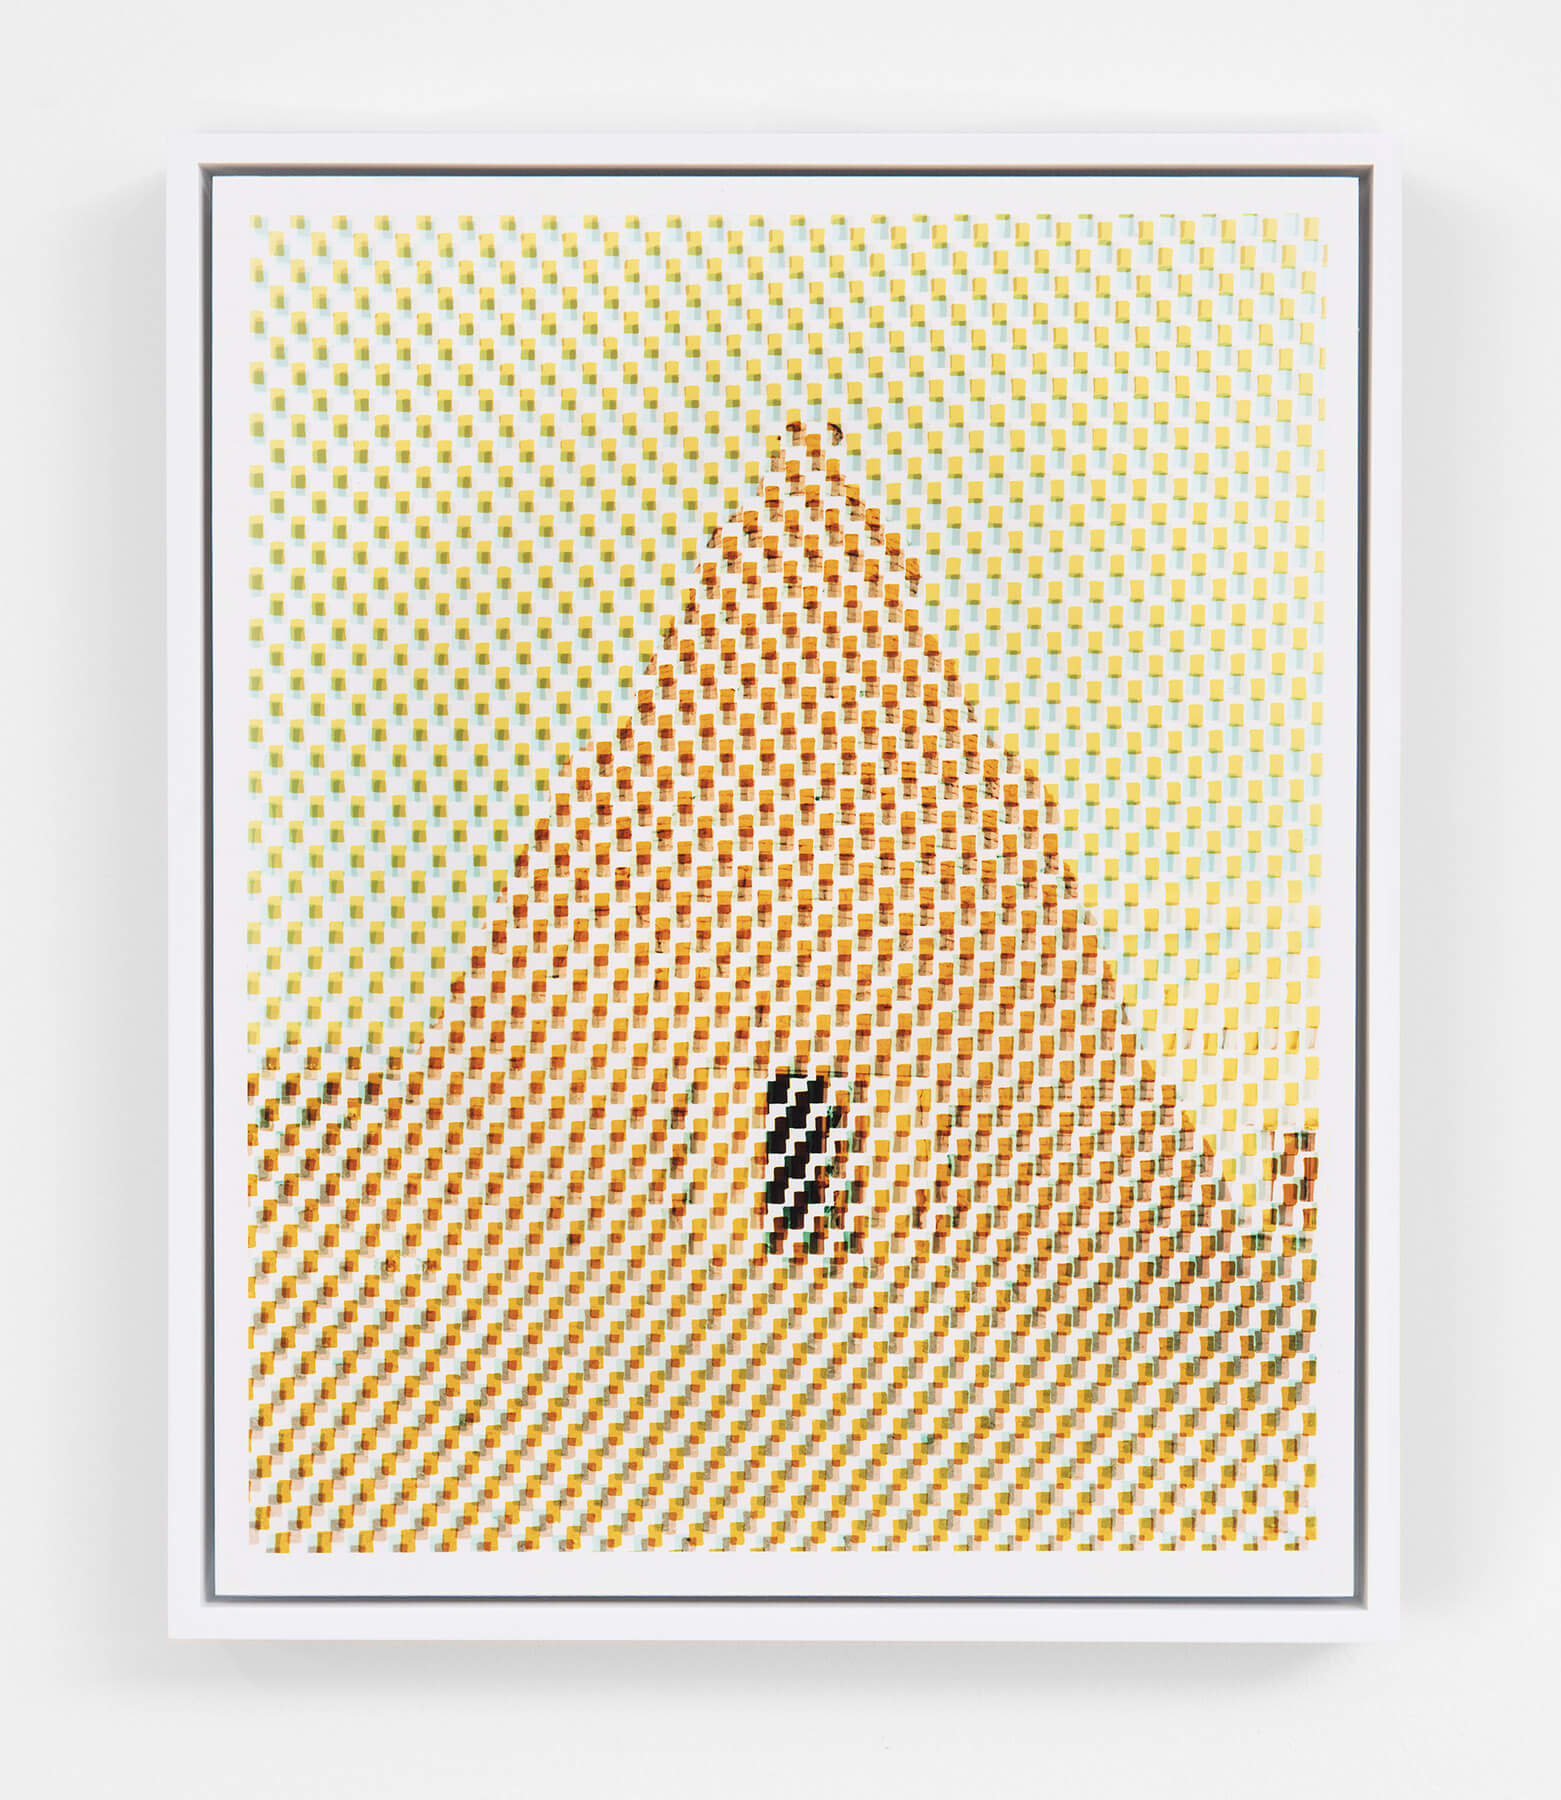 Livia Corona Benjamin
                                        'Infinite Rewrite IV', 2015
                                        10 1/2 x 8 1/2 Inches
                                        unique analog C-print
                                        